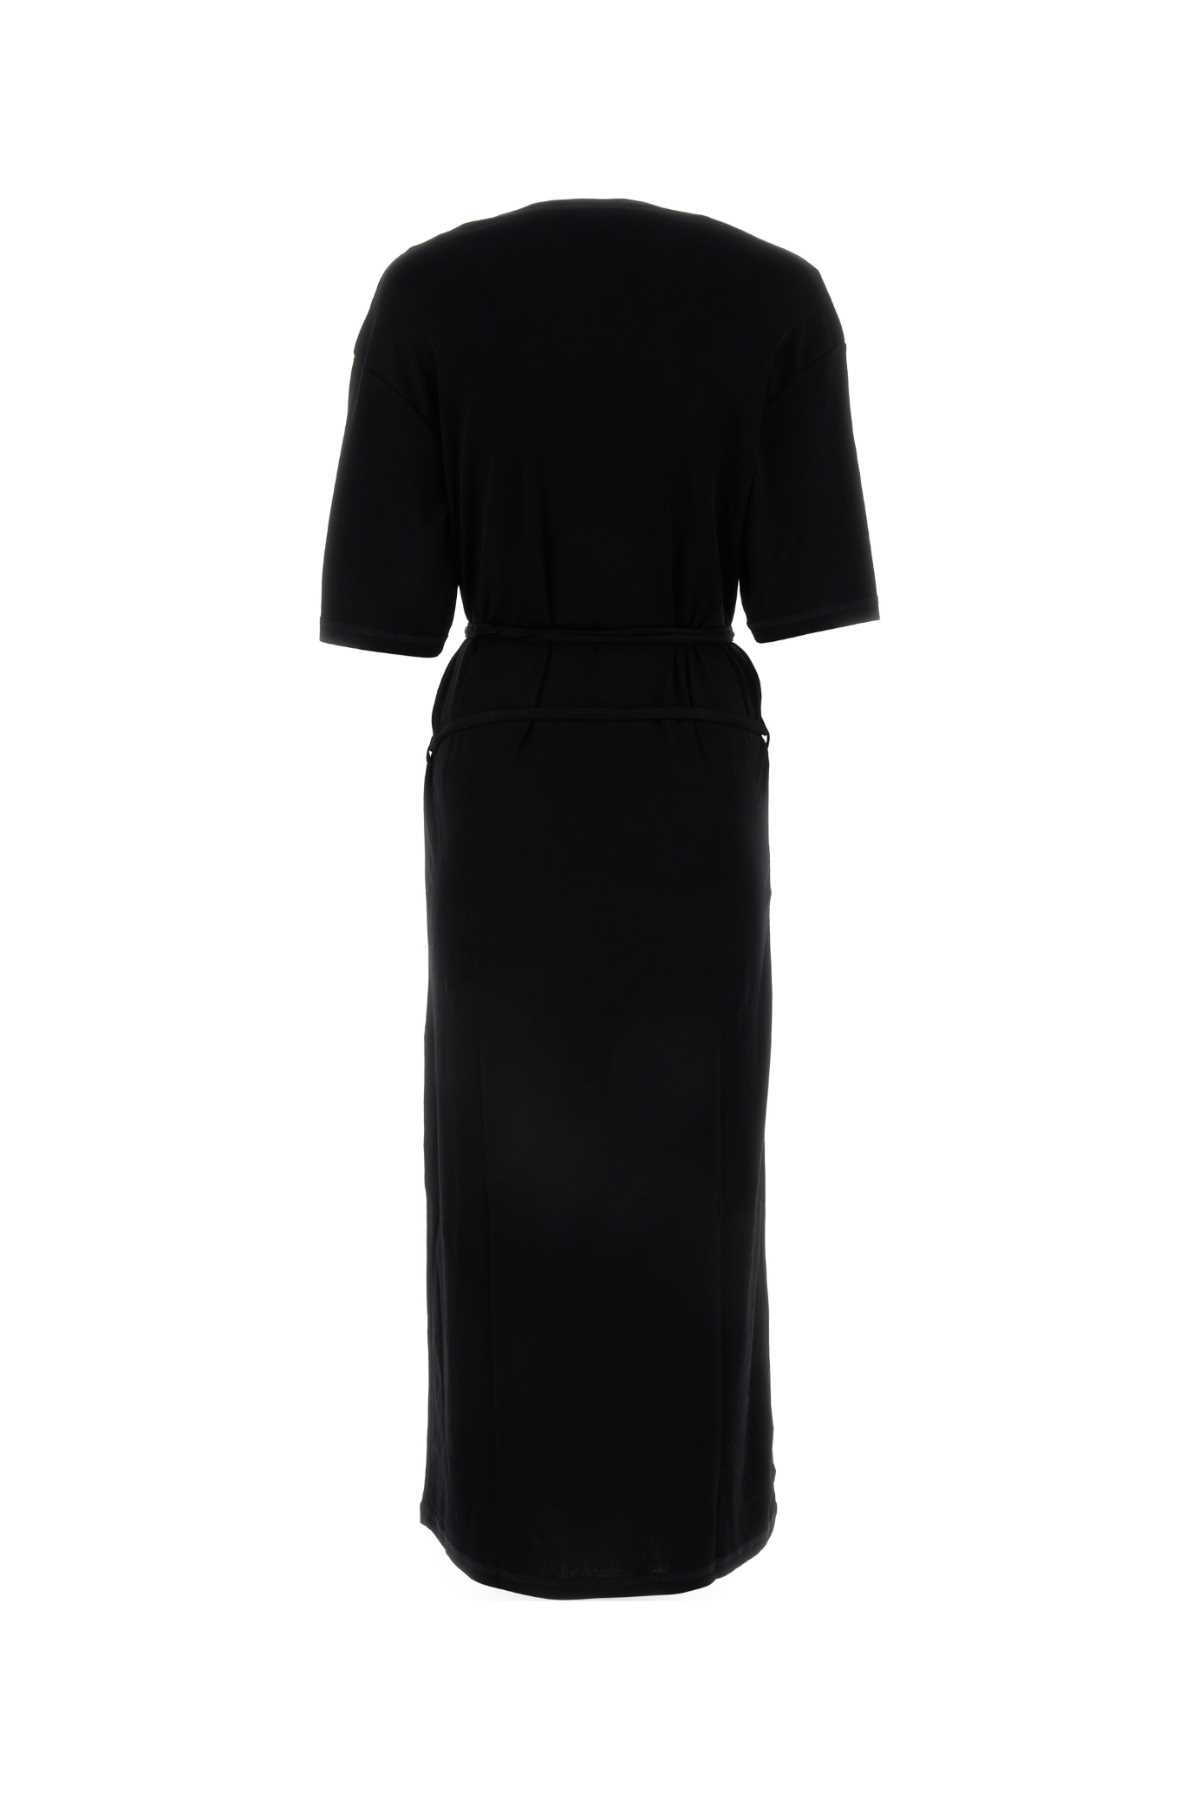 Lemaire Black Jersey Dress